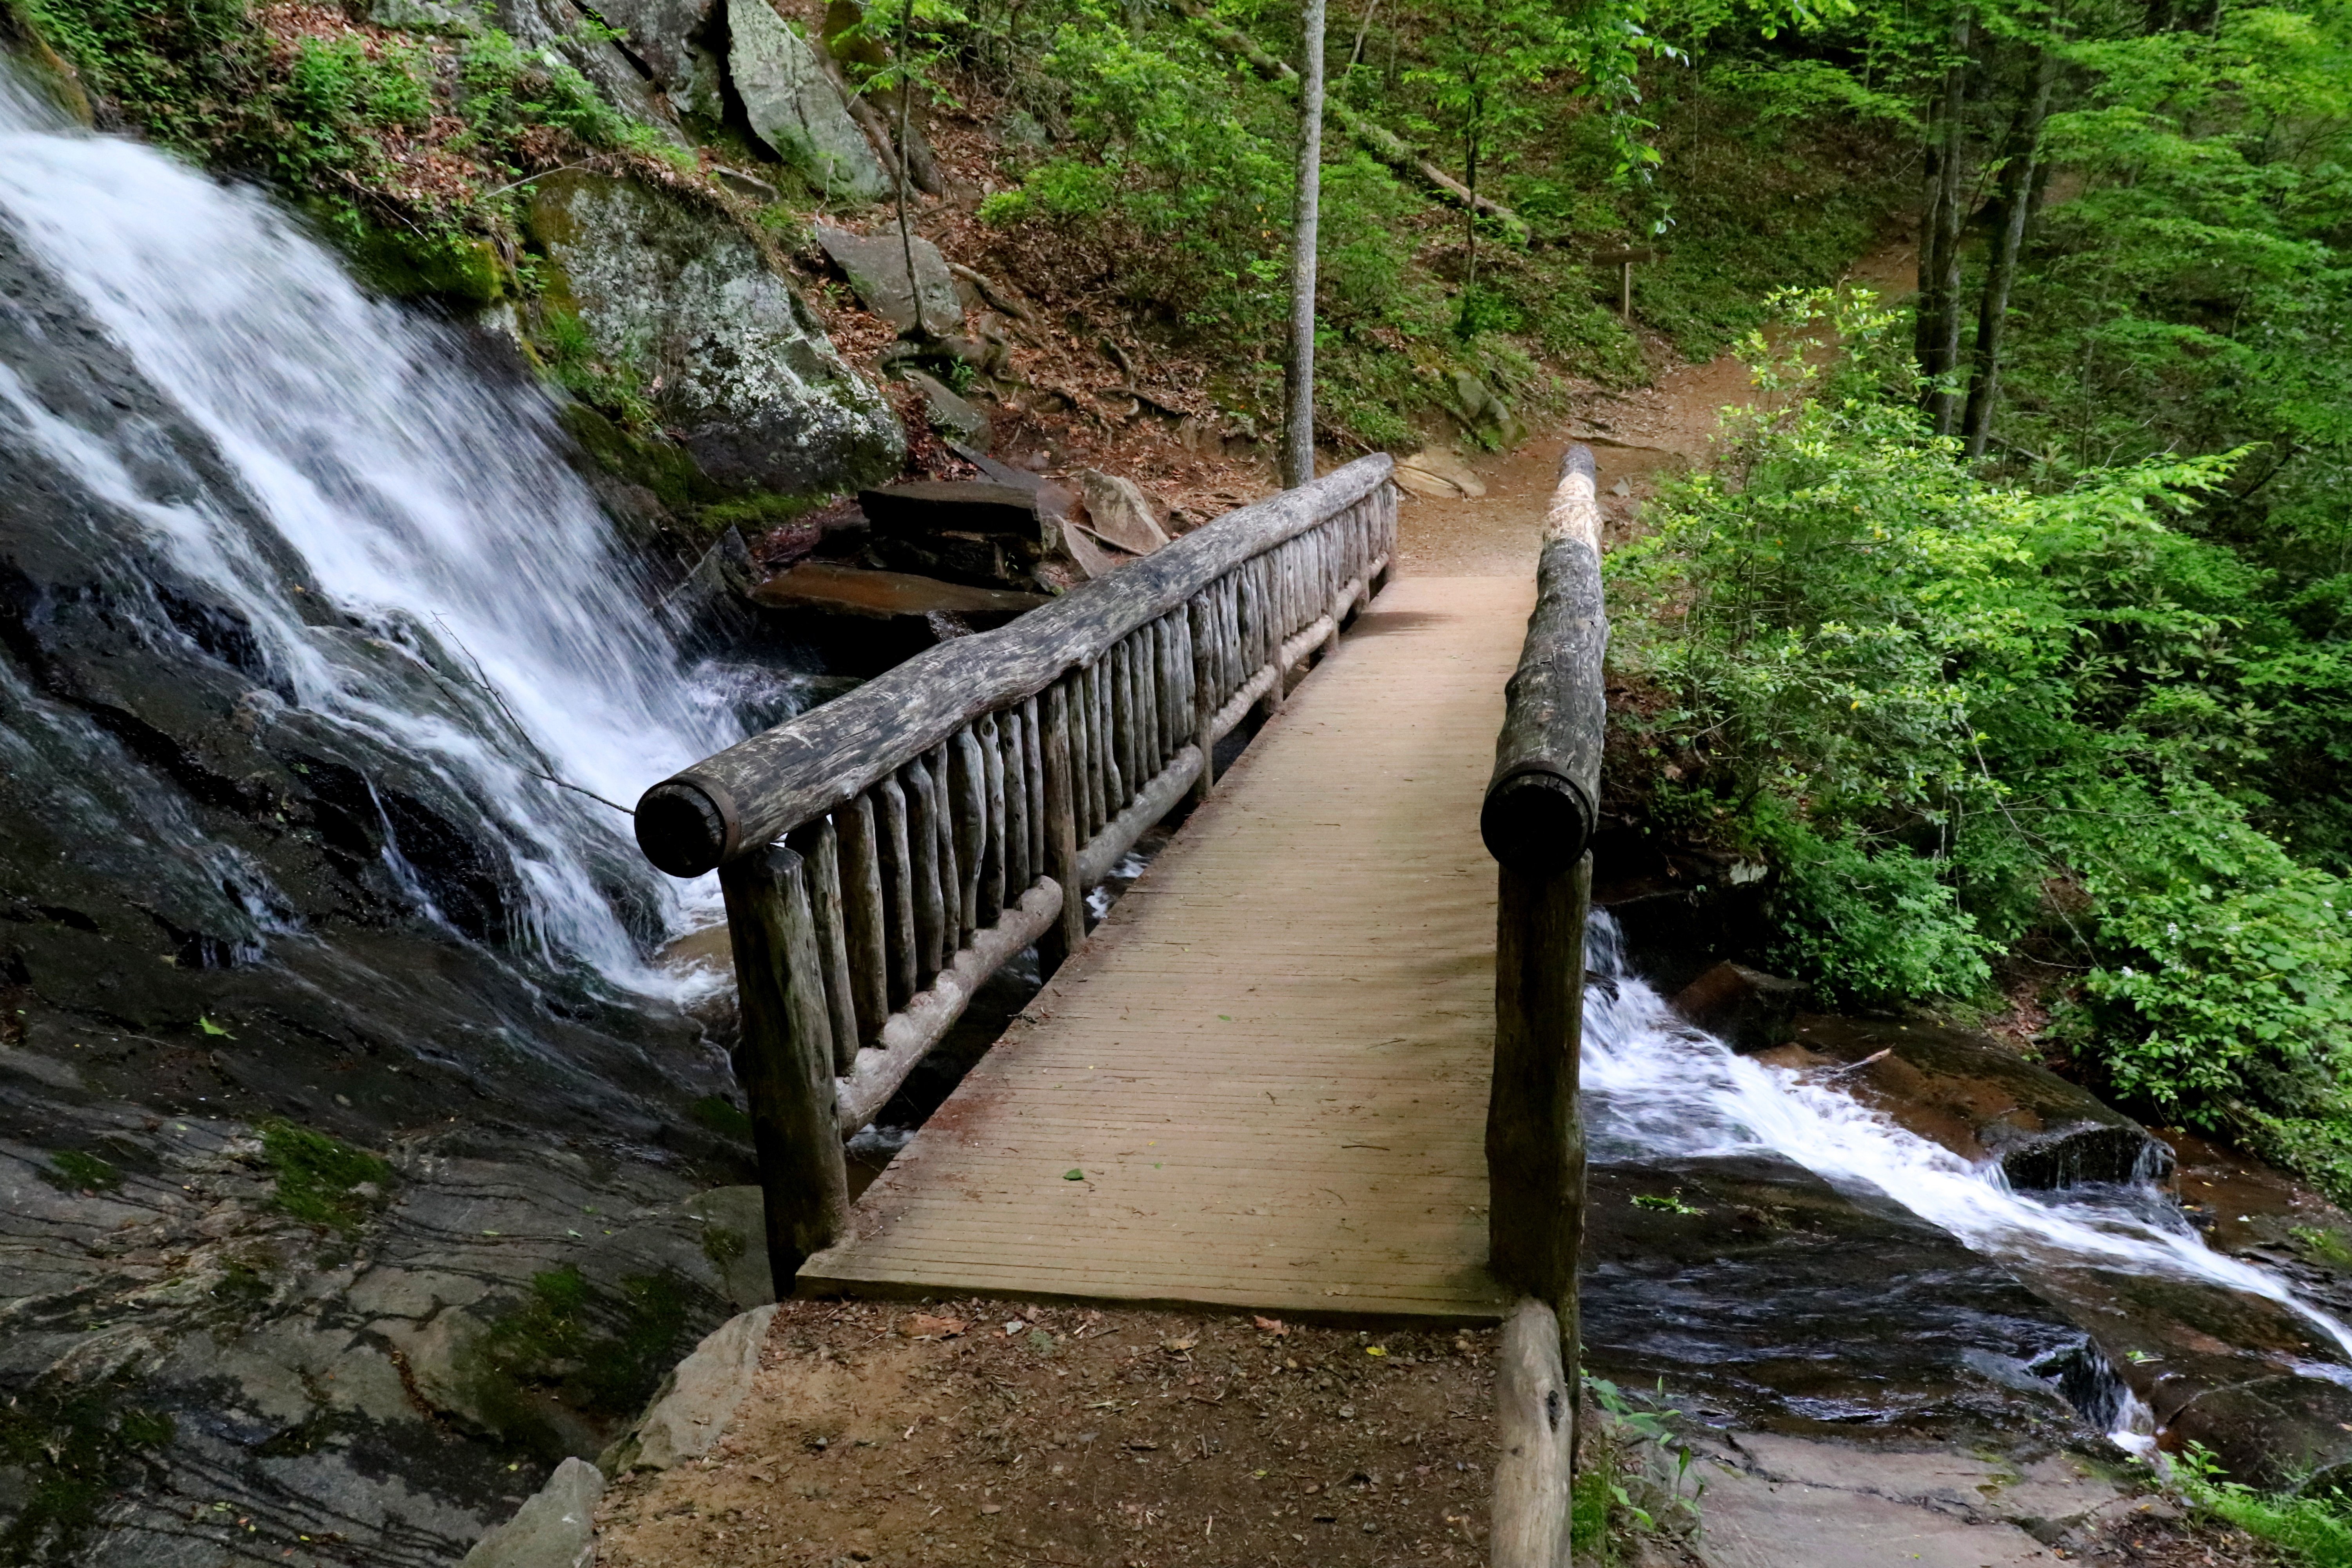 Explore the Waterfalls of Deep Creek, Juneywhank Falls, Tom Branch